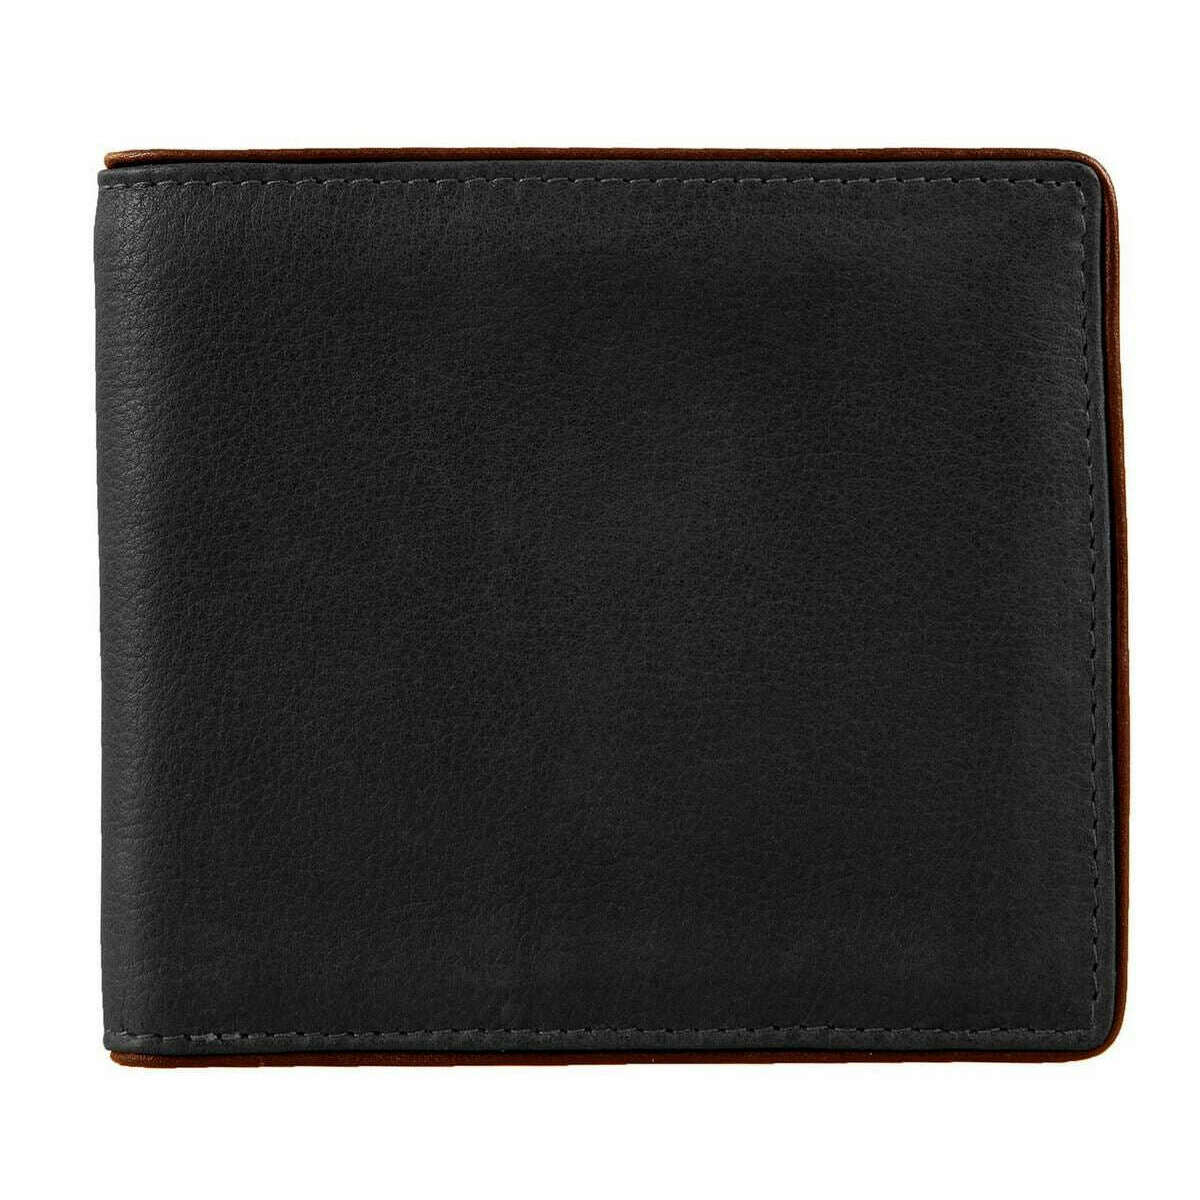 Dents Severn Leather RFID Blocking Coin Bifold Wallet - Black/Dark Tan